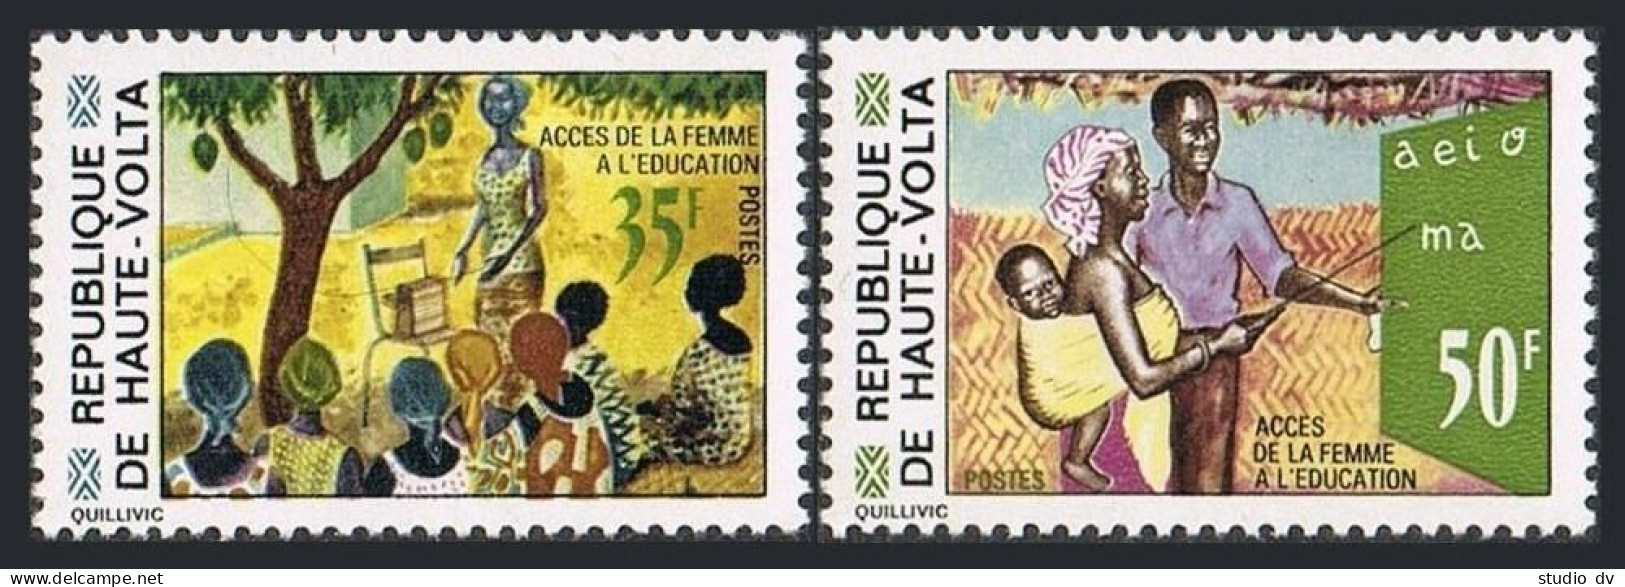 Burkina Faso 256-257, MNH. Michel 347-348. Women's Education, 1971. - Burkina Faso (1984-...)